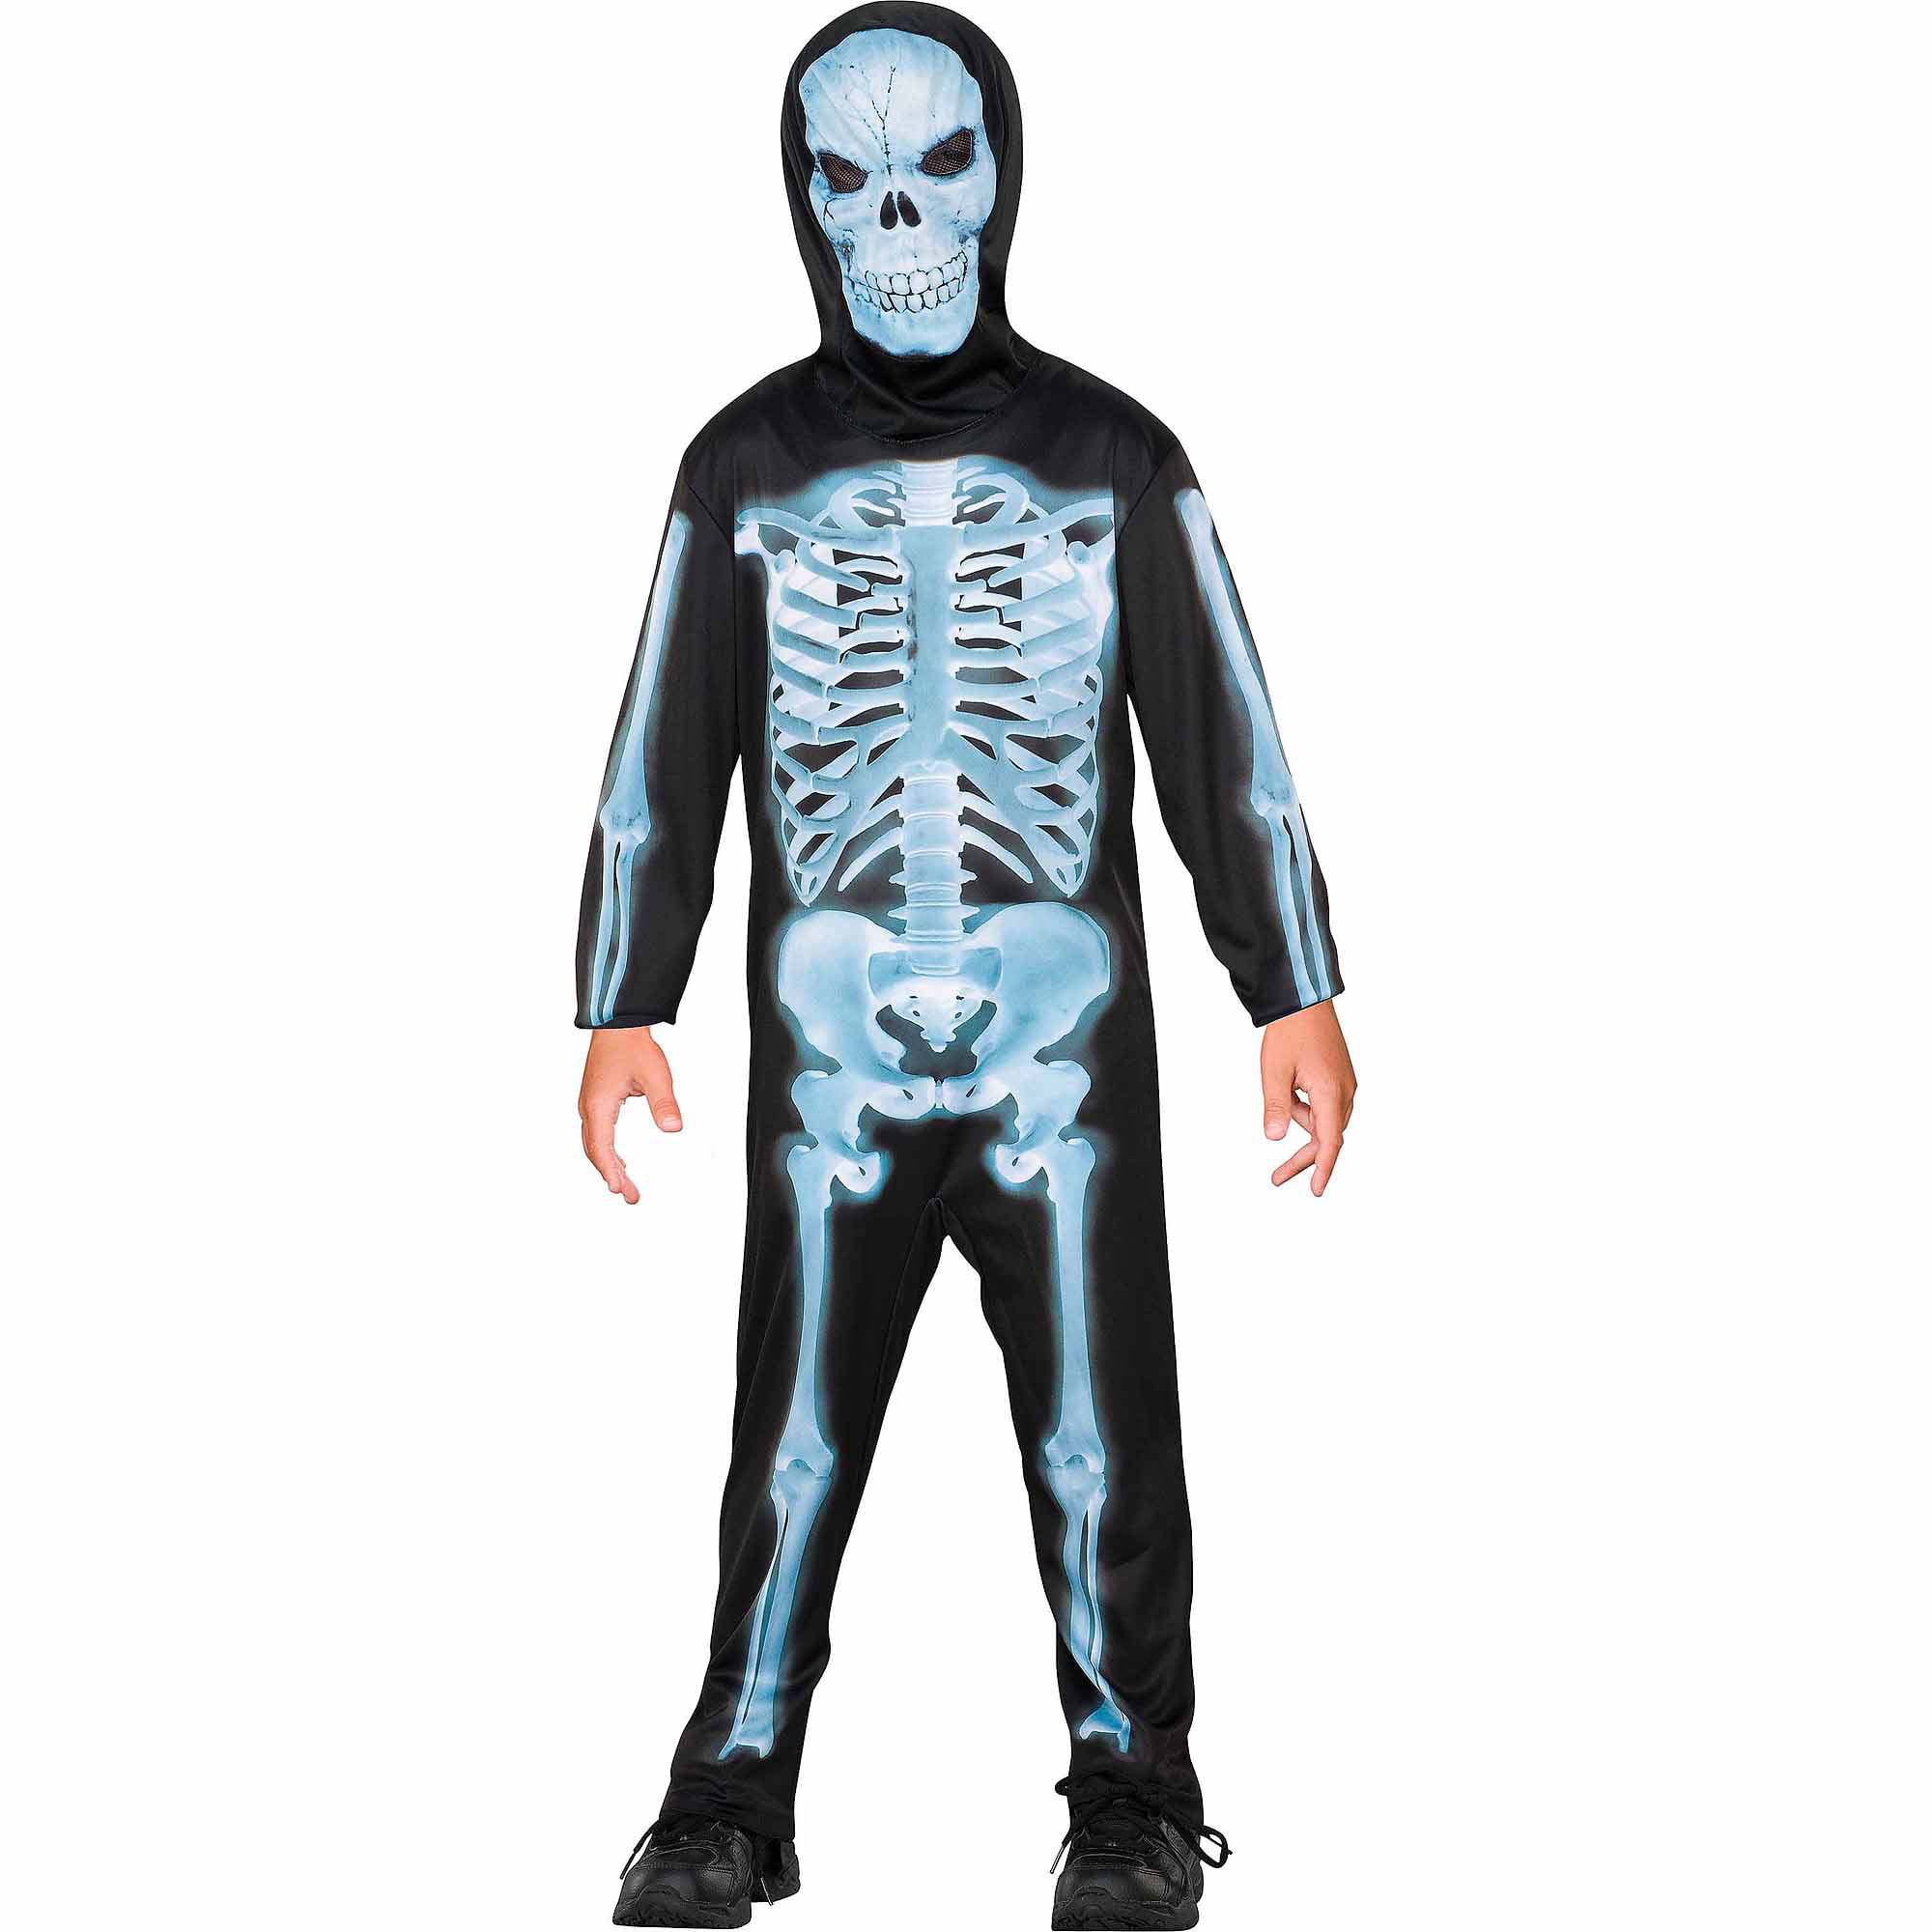 X-Ray Skeleton Child Halloween Costume - Walmart.com